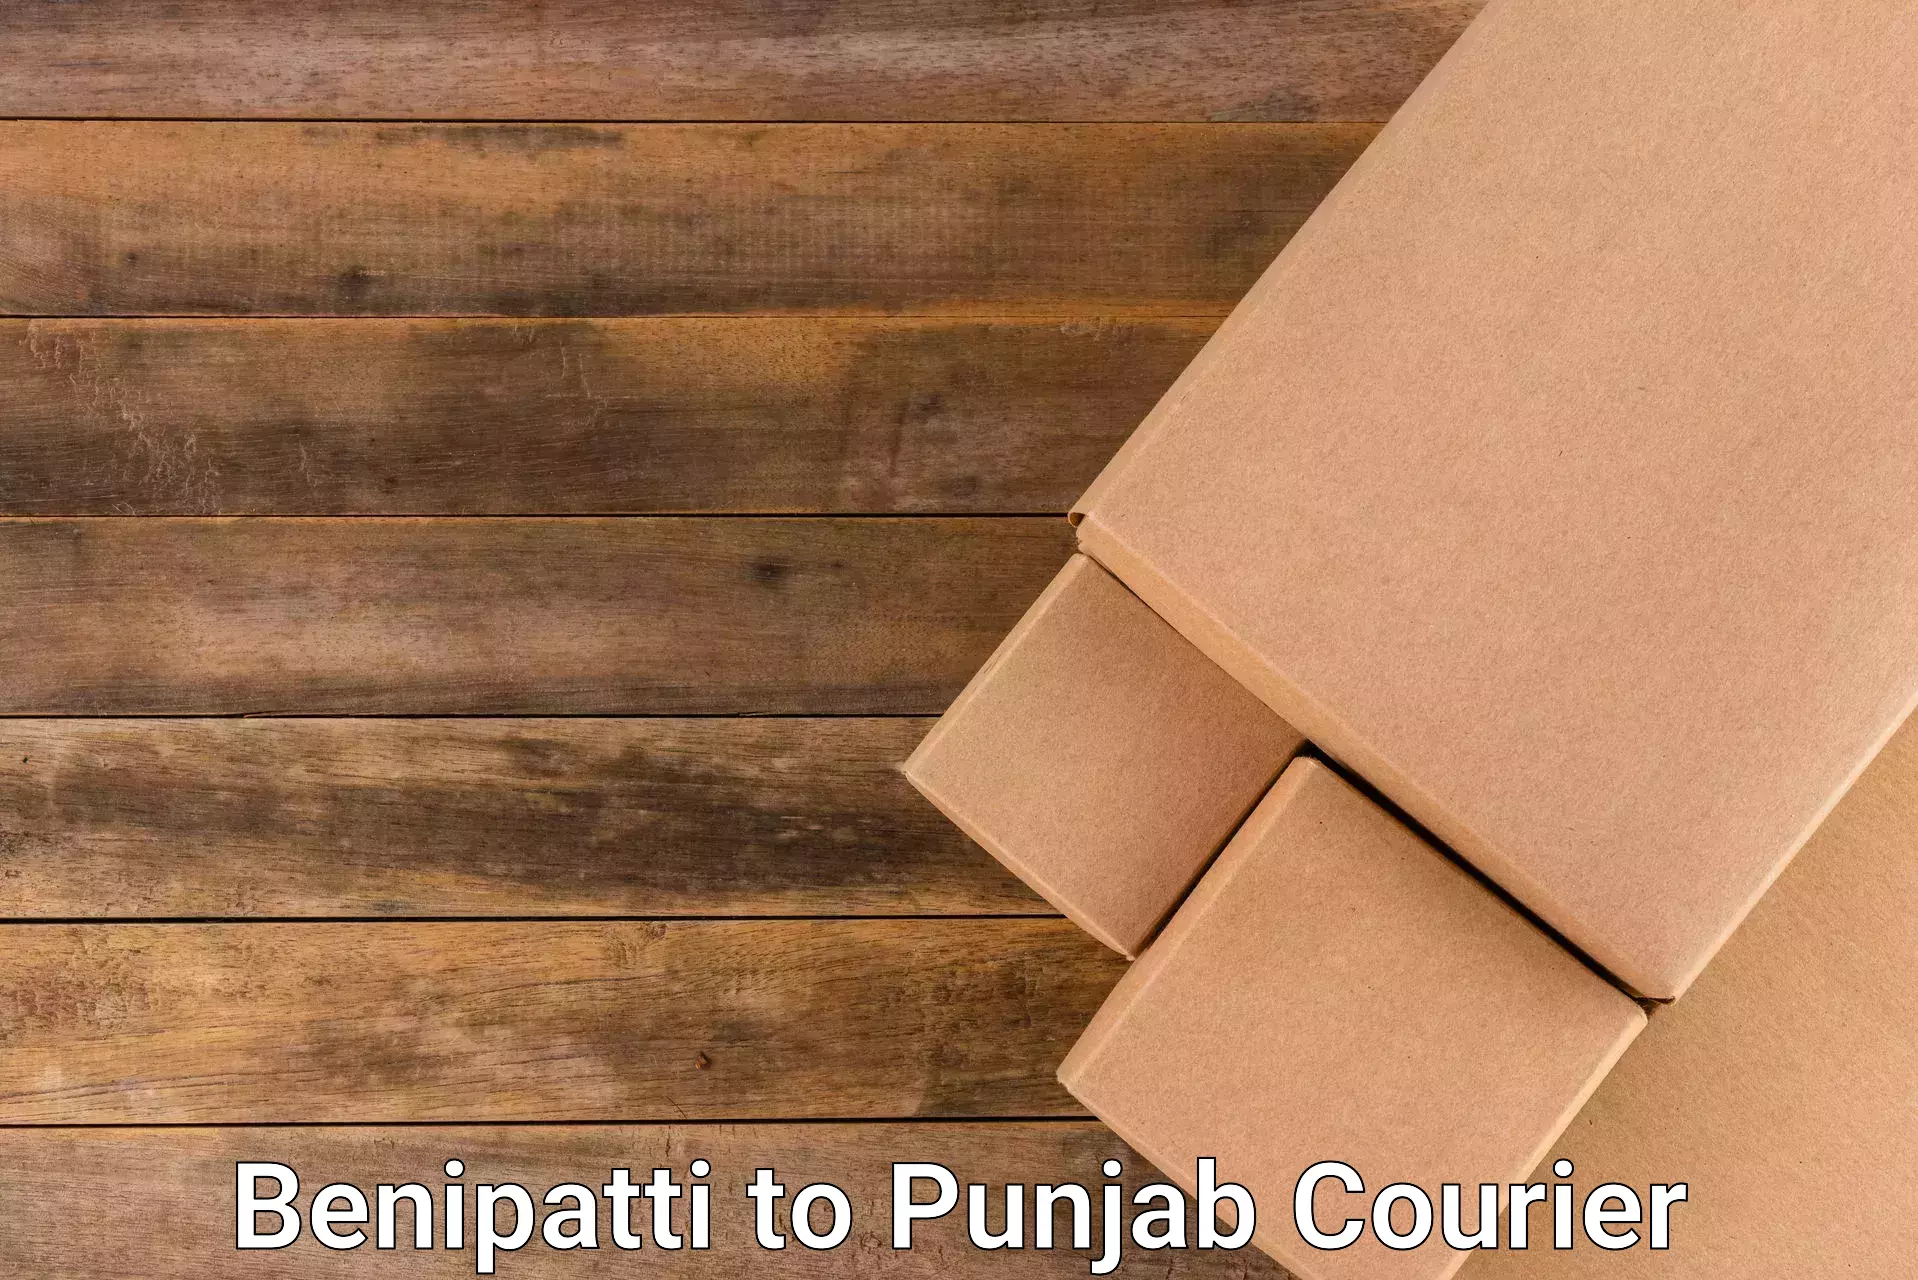 Courier service booking Benipatti to Jalandhar